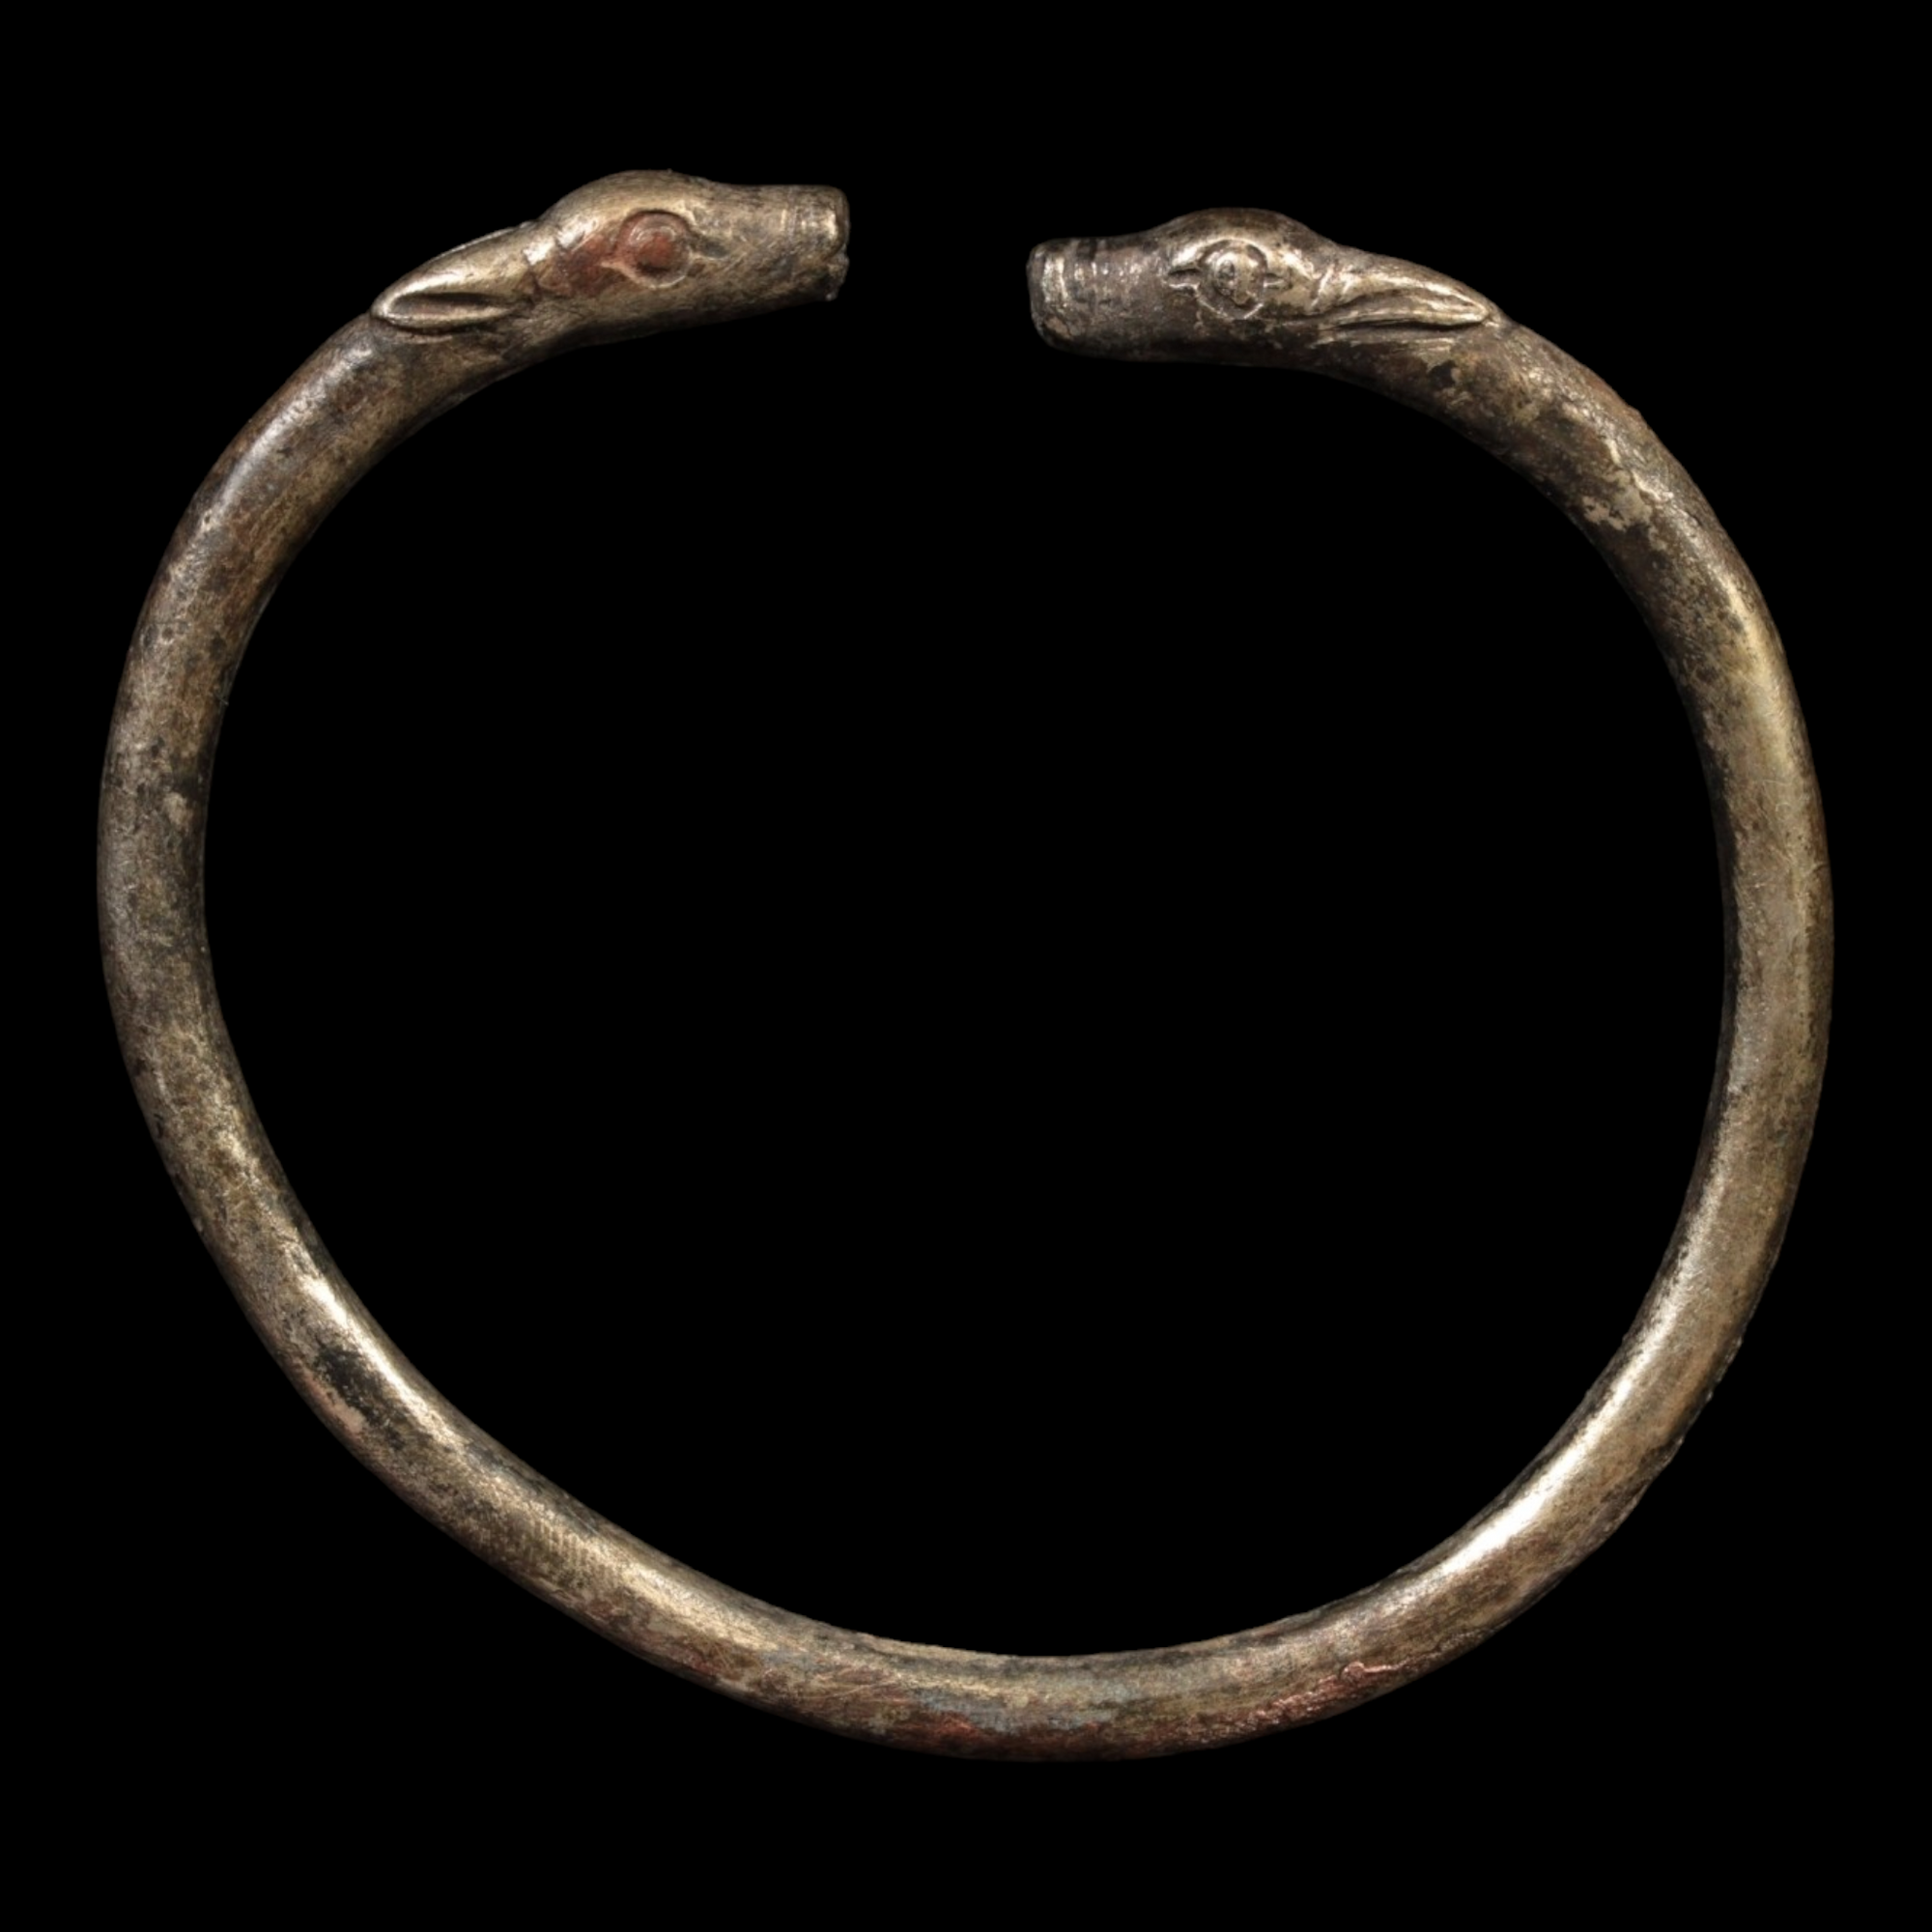 Achaemenid Empire, Goat Headed Silver Bracelet (66mm, 27.19g) - c. 530 to 350 BCE - Ancient Persia